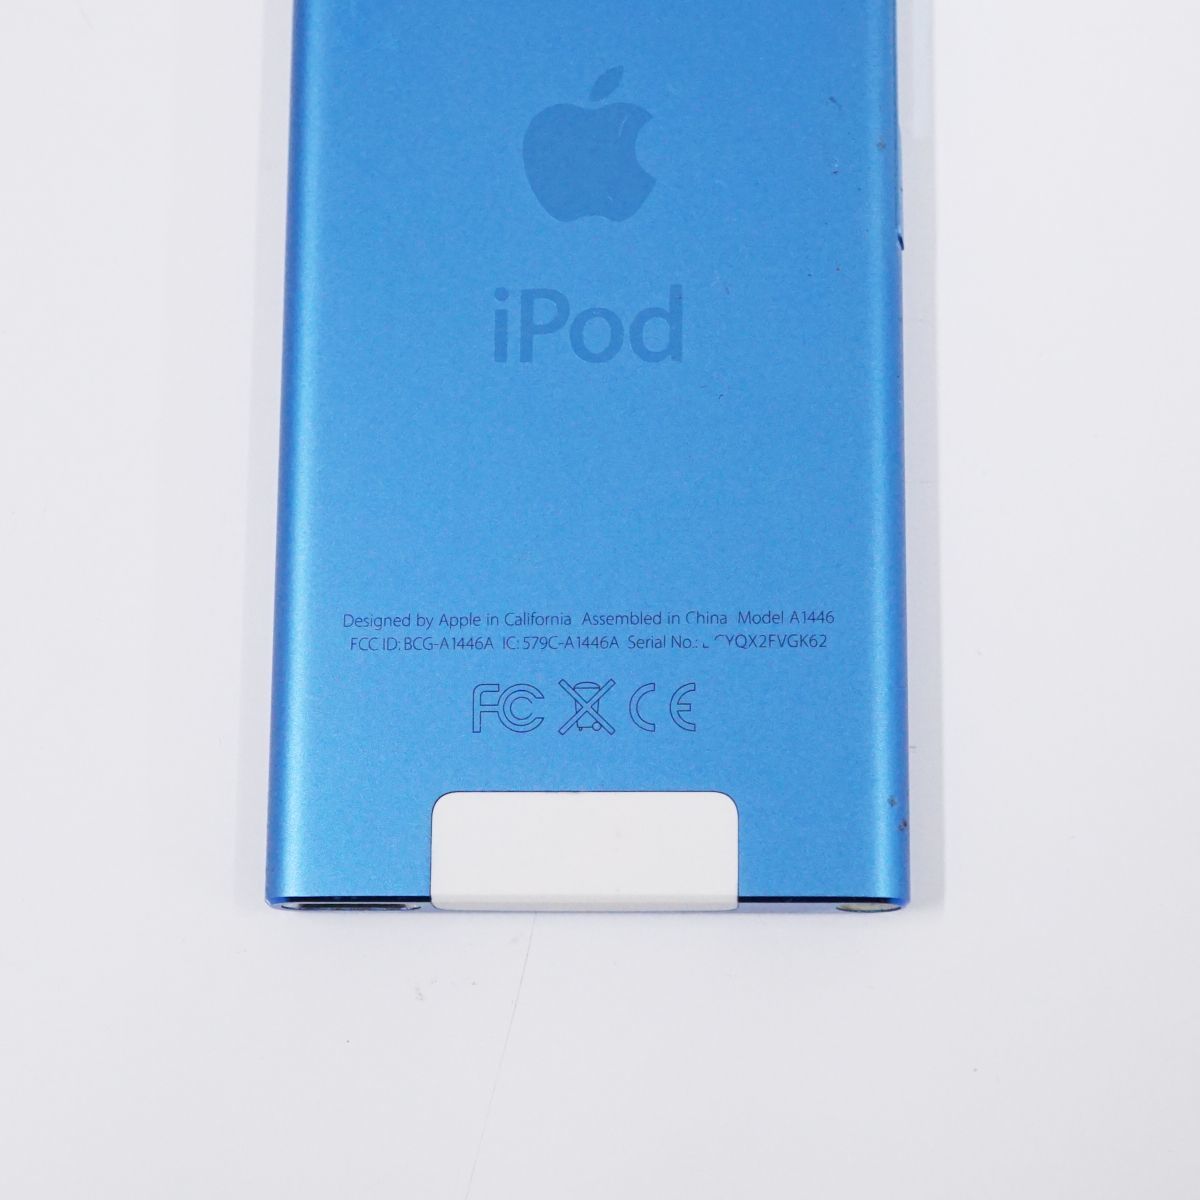 Apple アップル iPod nano アイポッド ナノ 16GB USED美品 第7世代 ブルー MKN02J A1446 完動品 T V9123_画像4